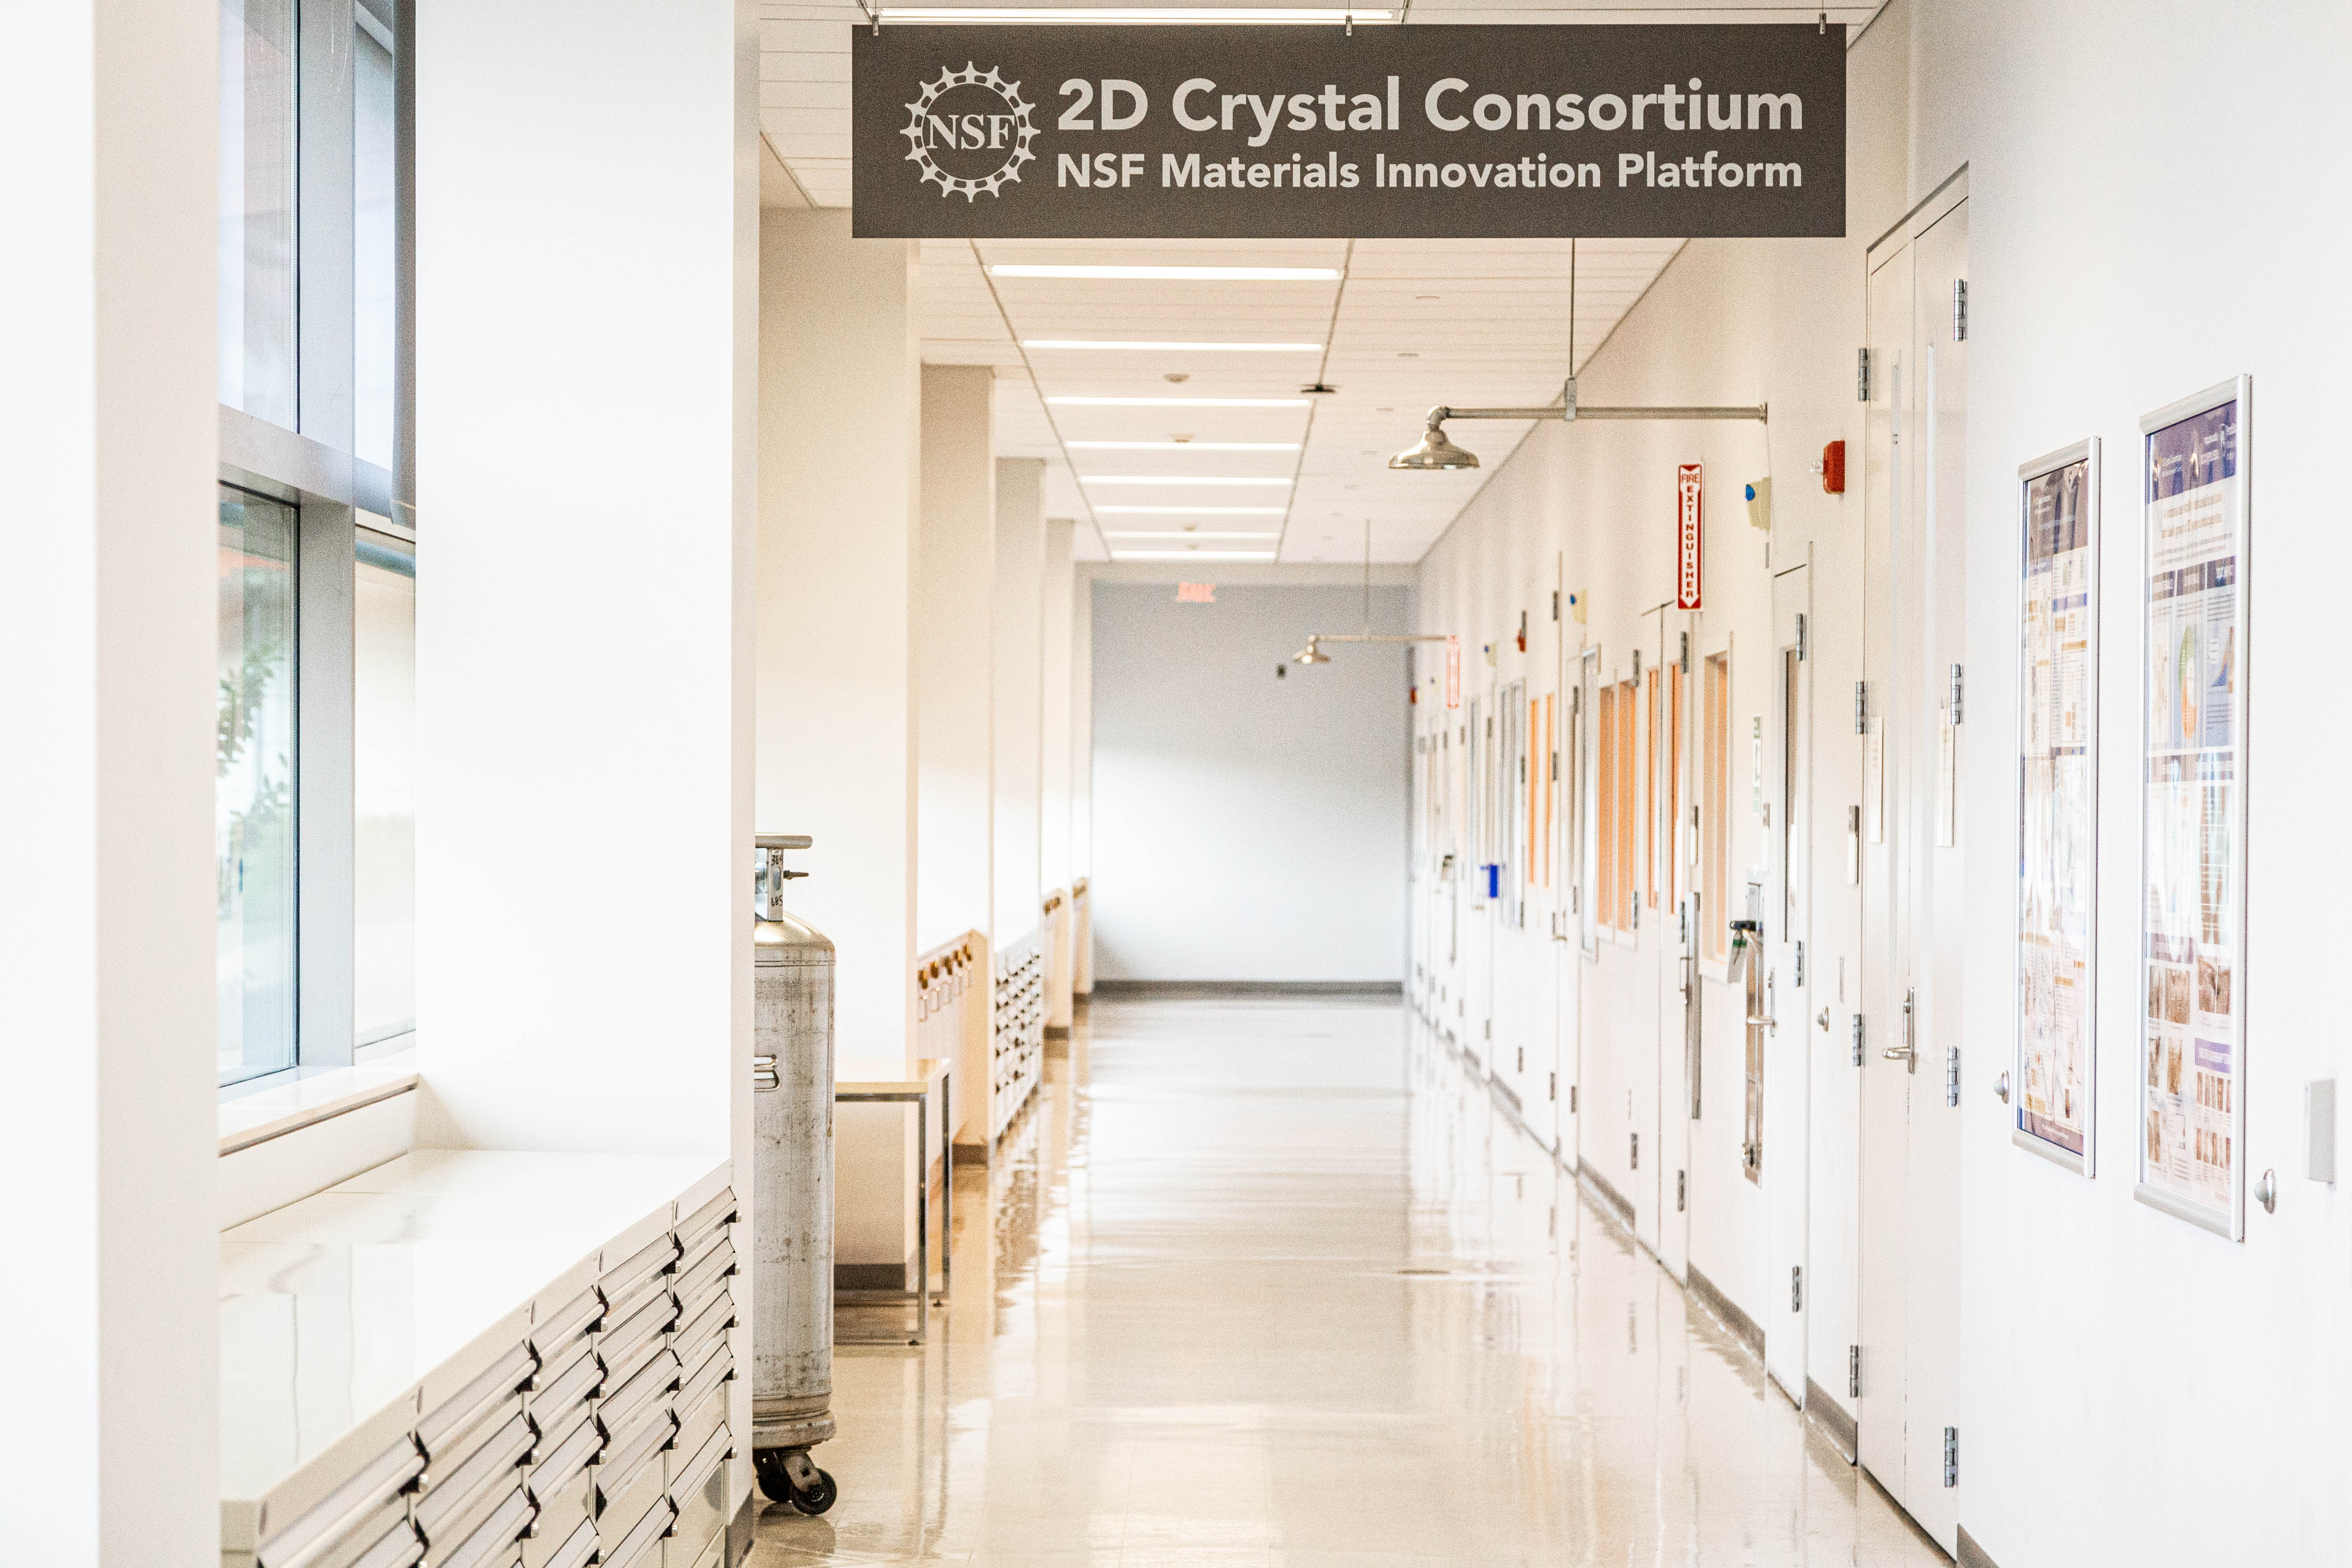 2DCC Crystal Consortium hallway signage, courtesy